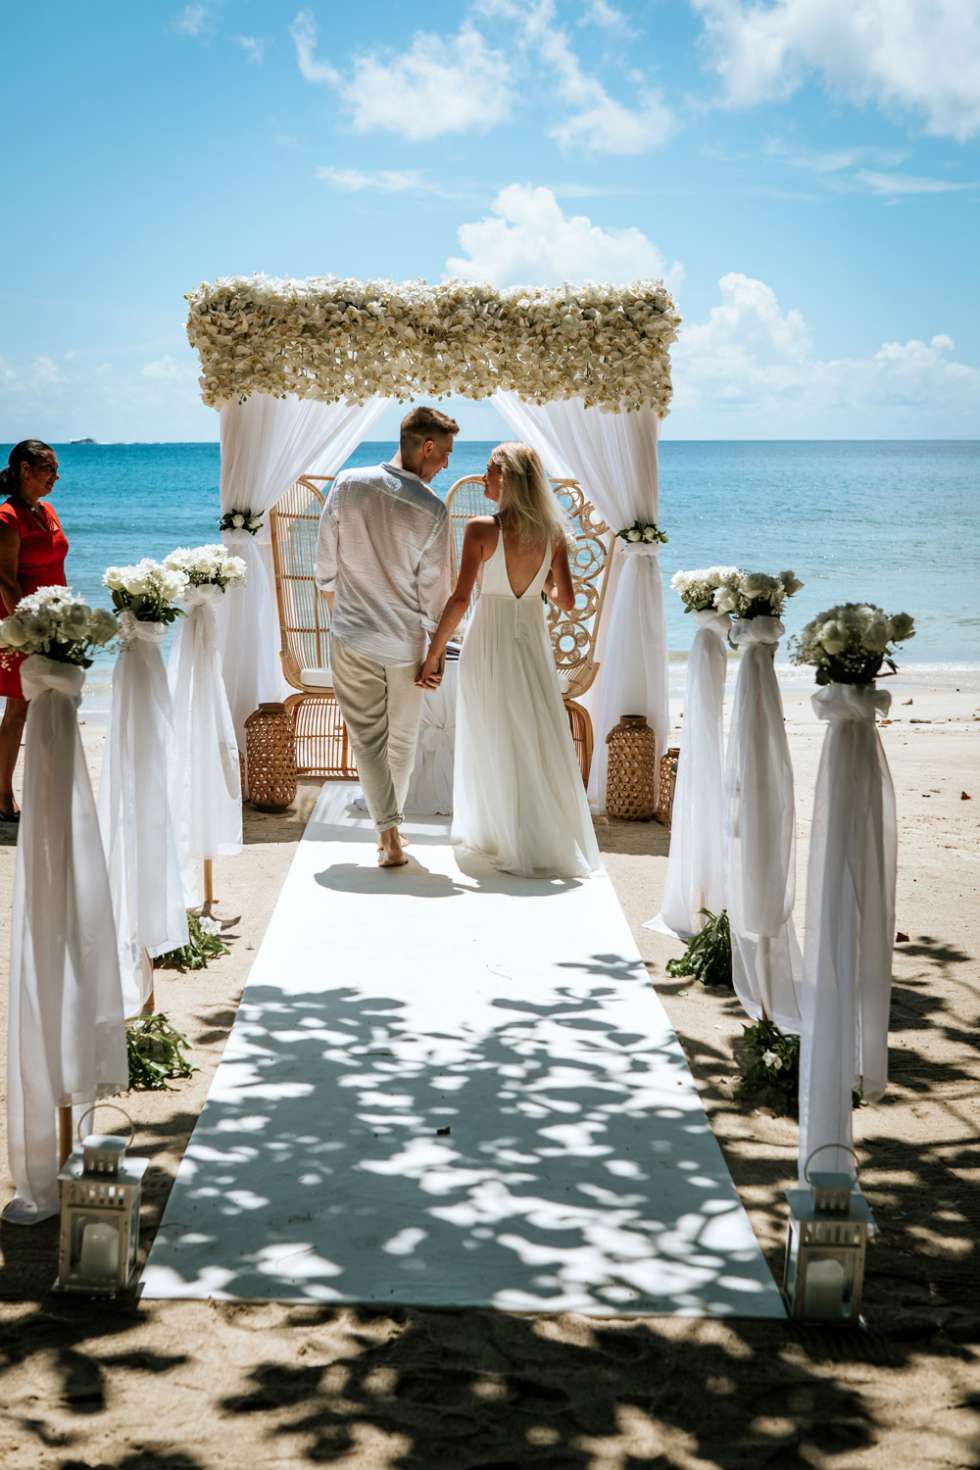 Tourism Seychelles Organises 'Wedding in Paradise' Event in Dubai 